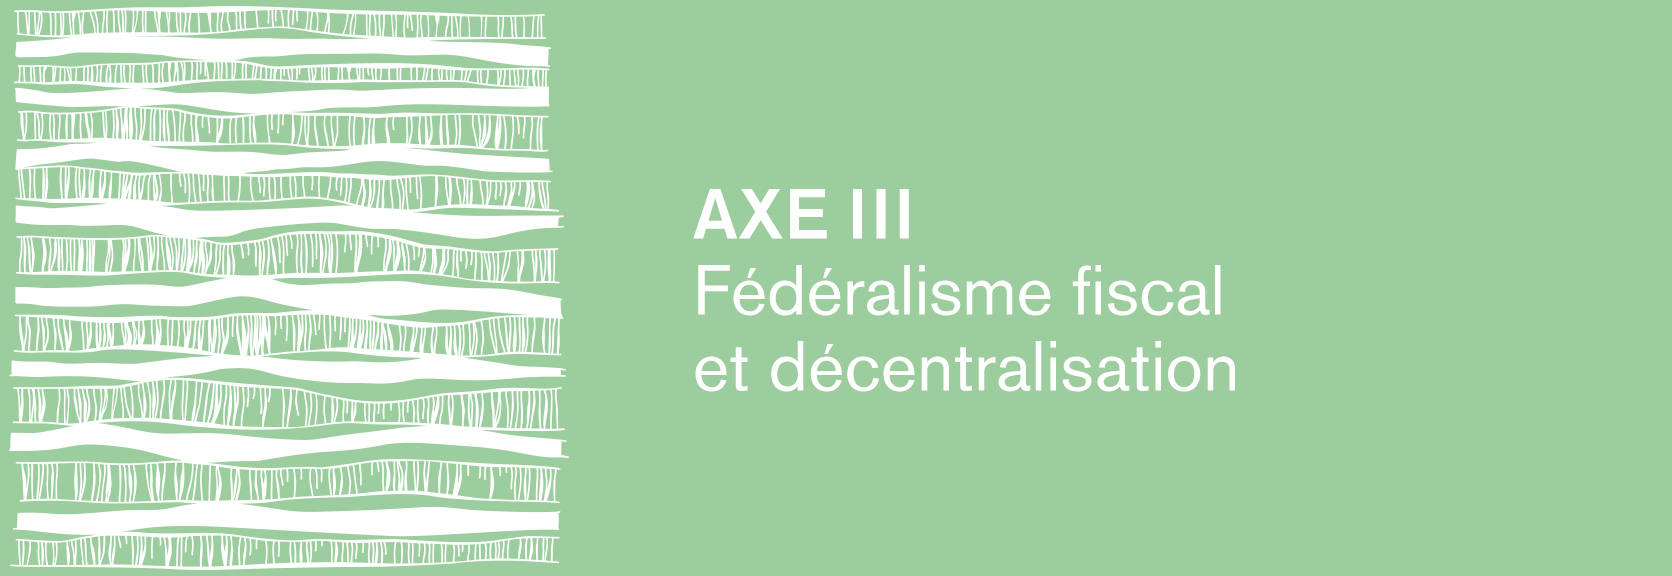 AXE III – Fédéralisme fiscal et décentralisation